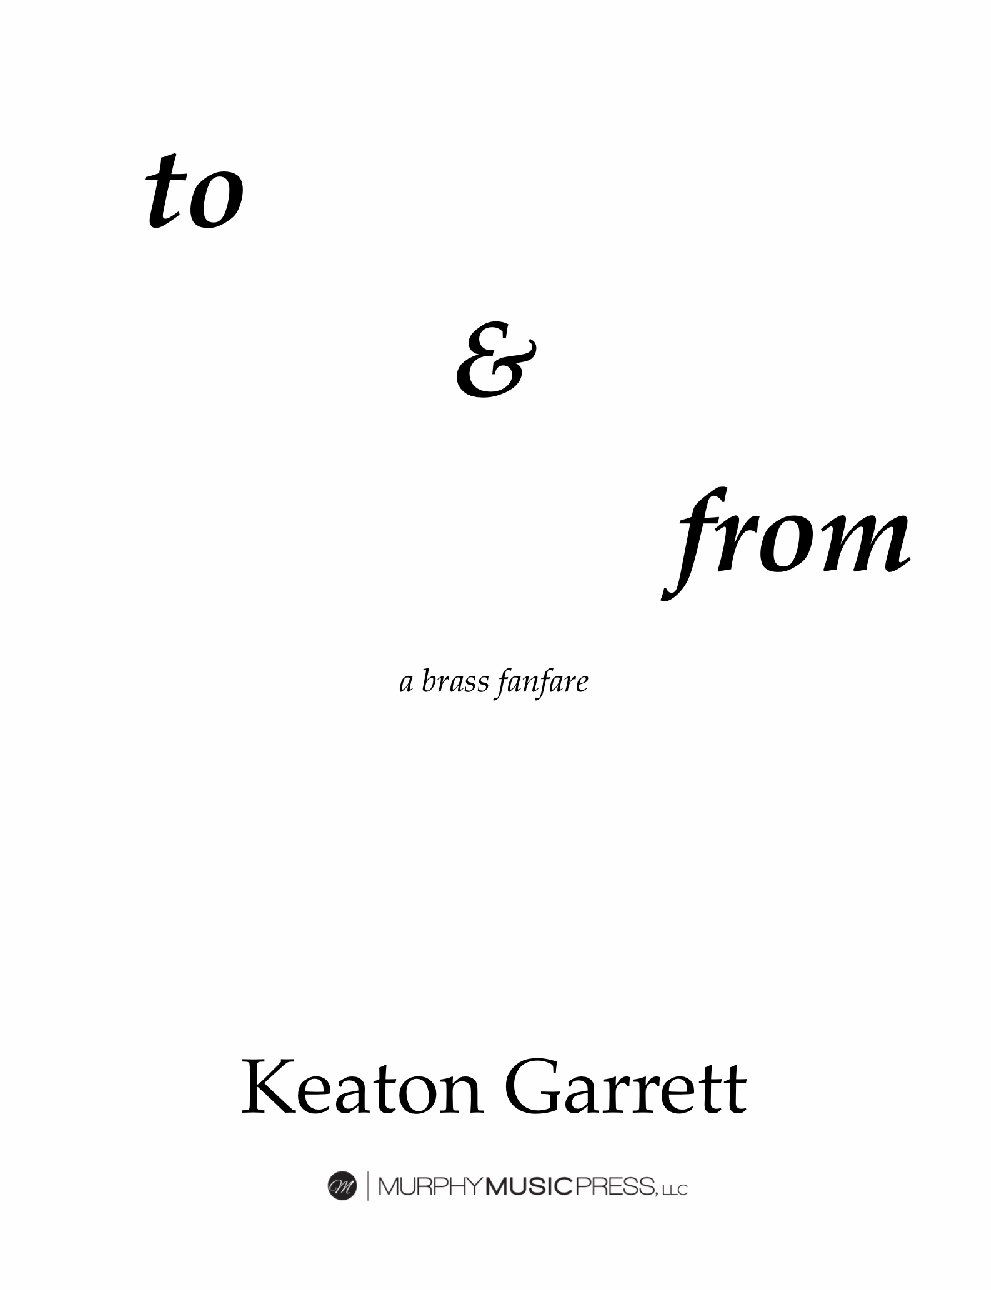 To & From by Keaton Garrett